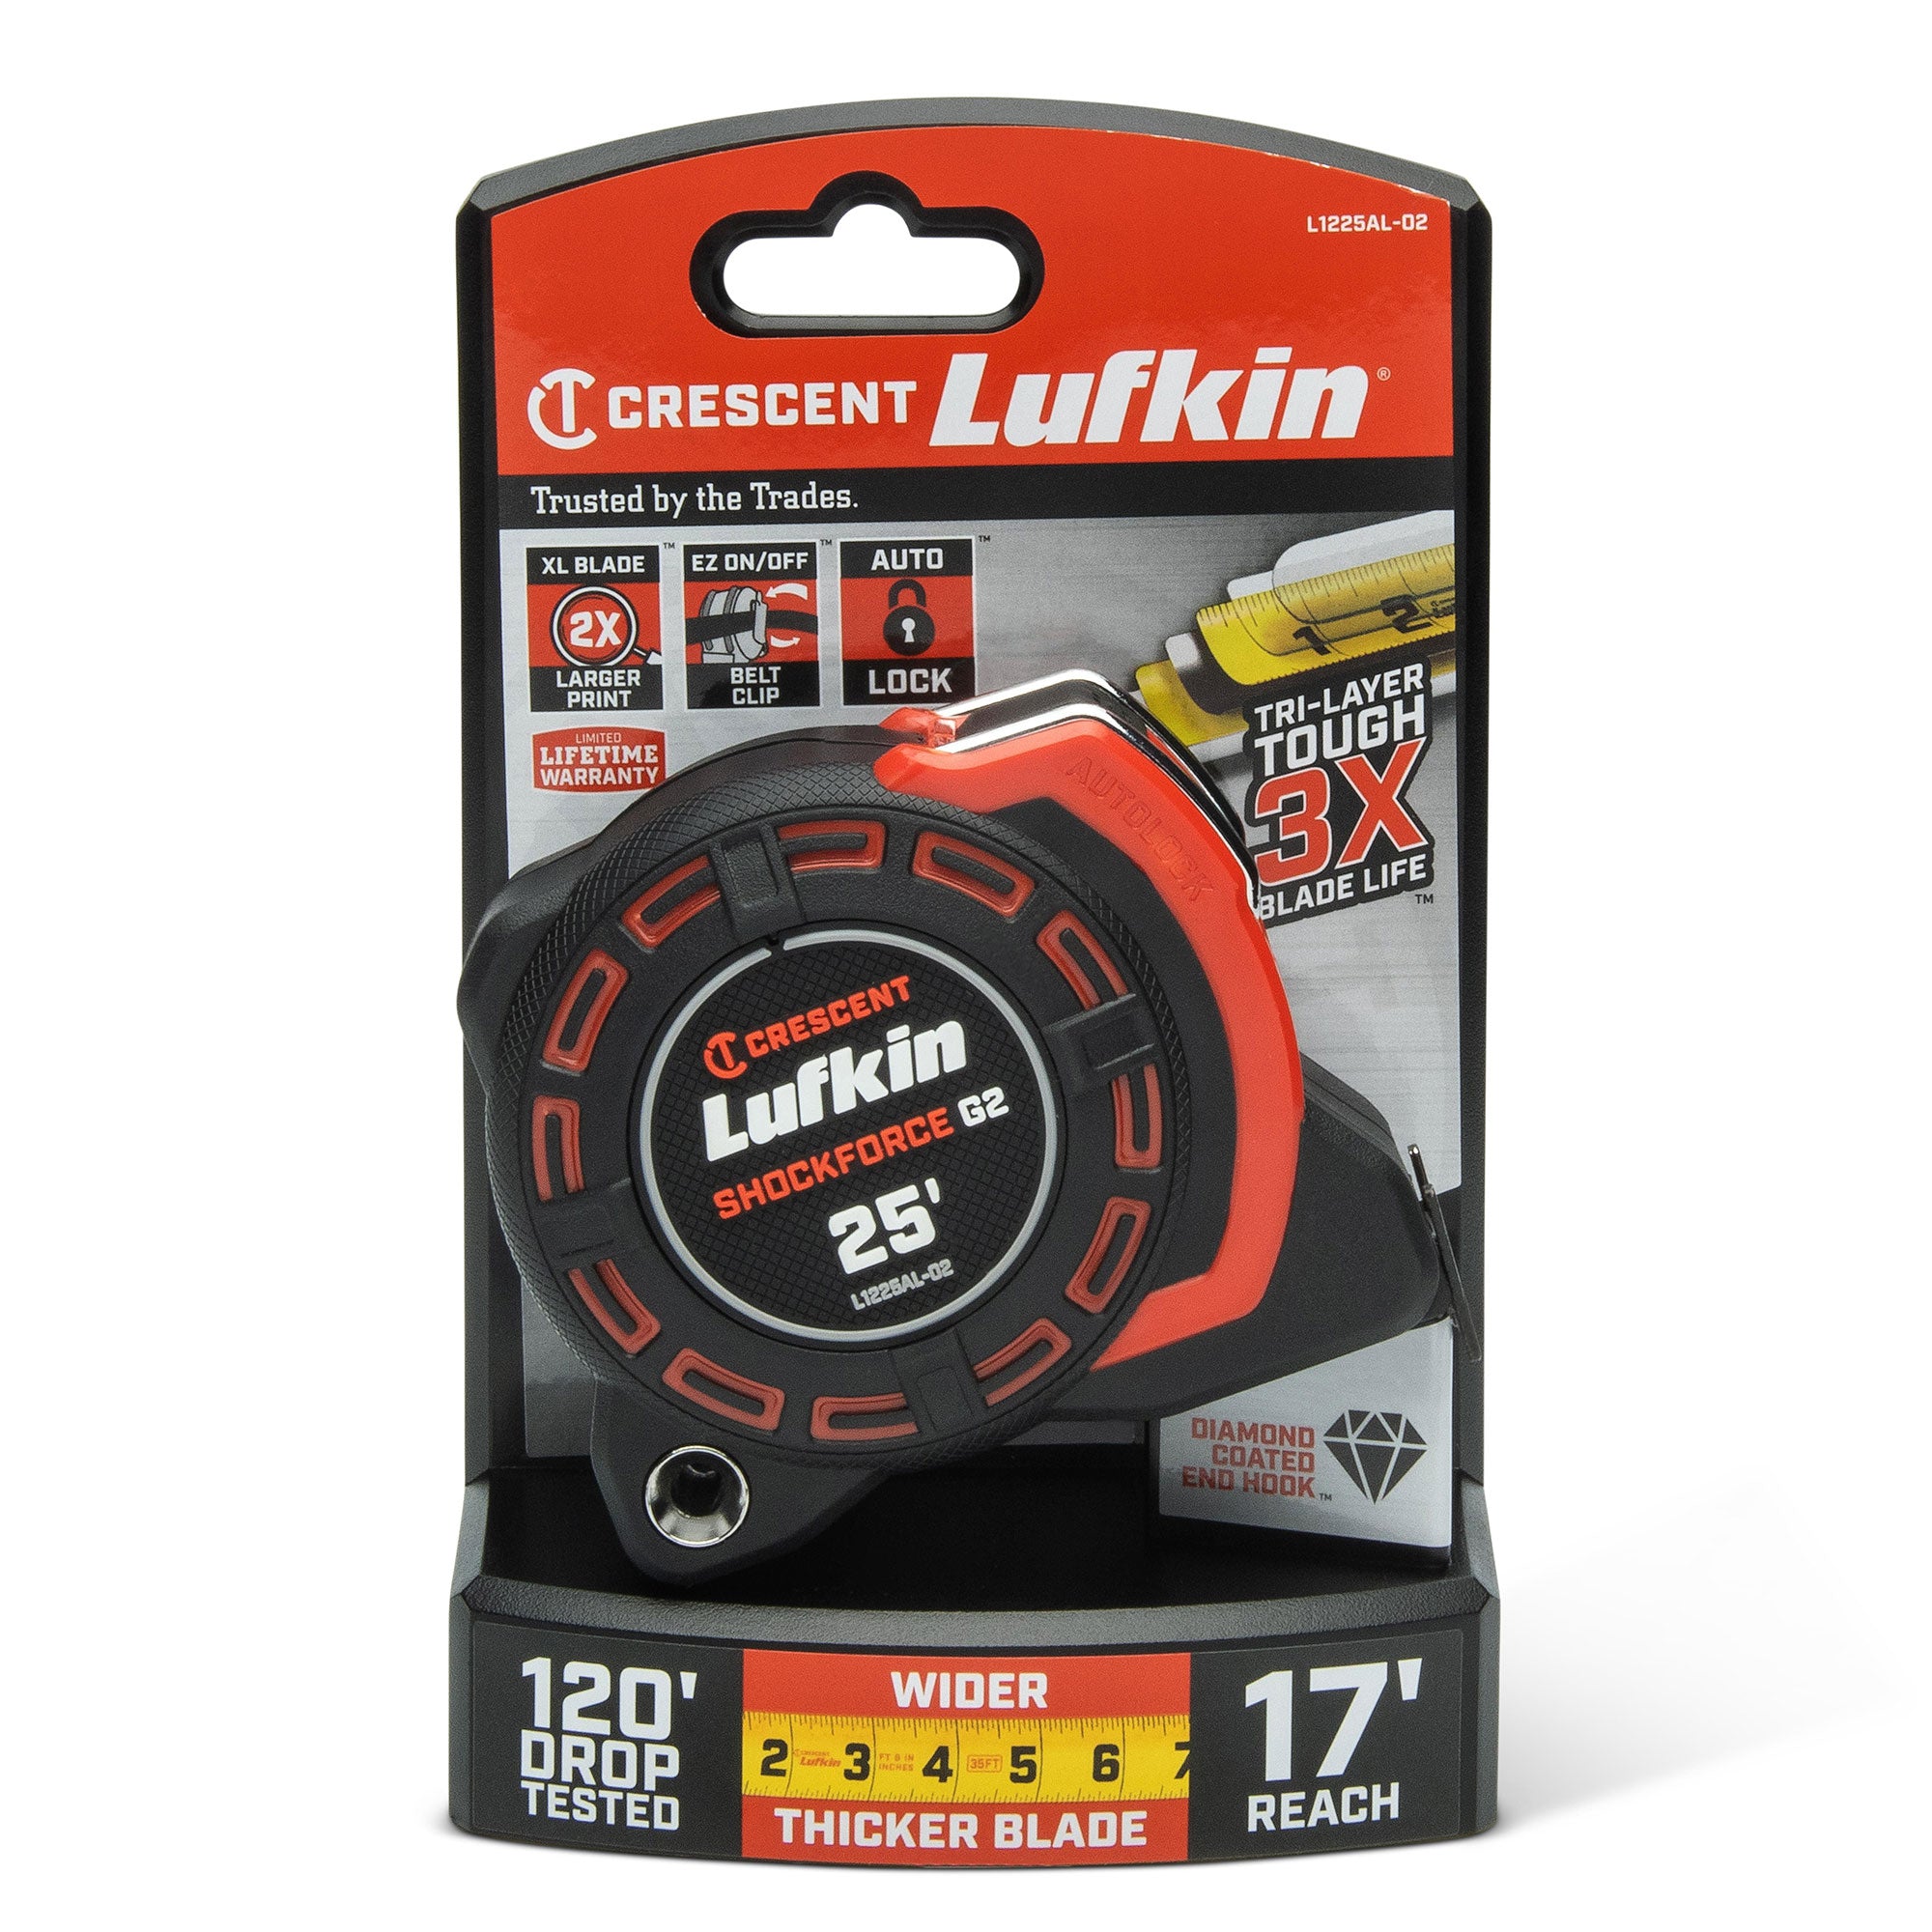 Lufkin L1225AL-02 1-1/4" x 25' Shockforce G2 Auto-Lock Tape Measure